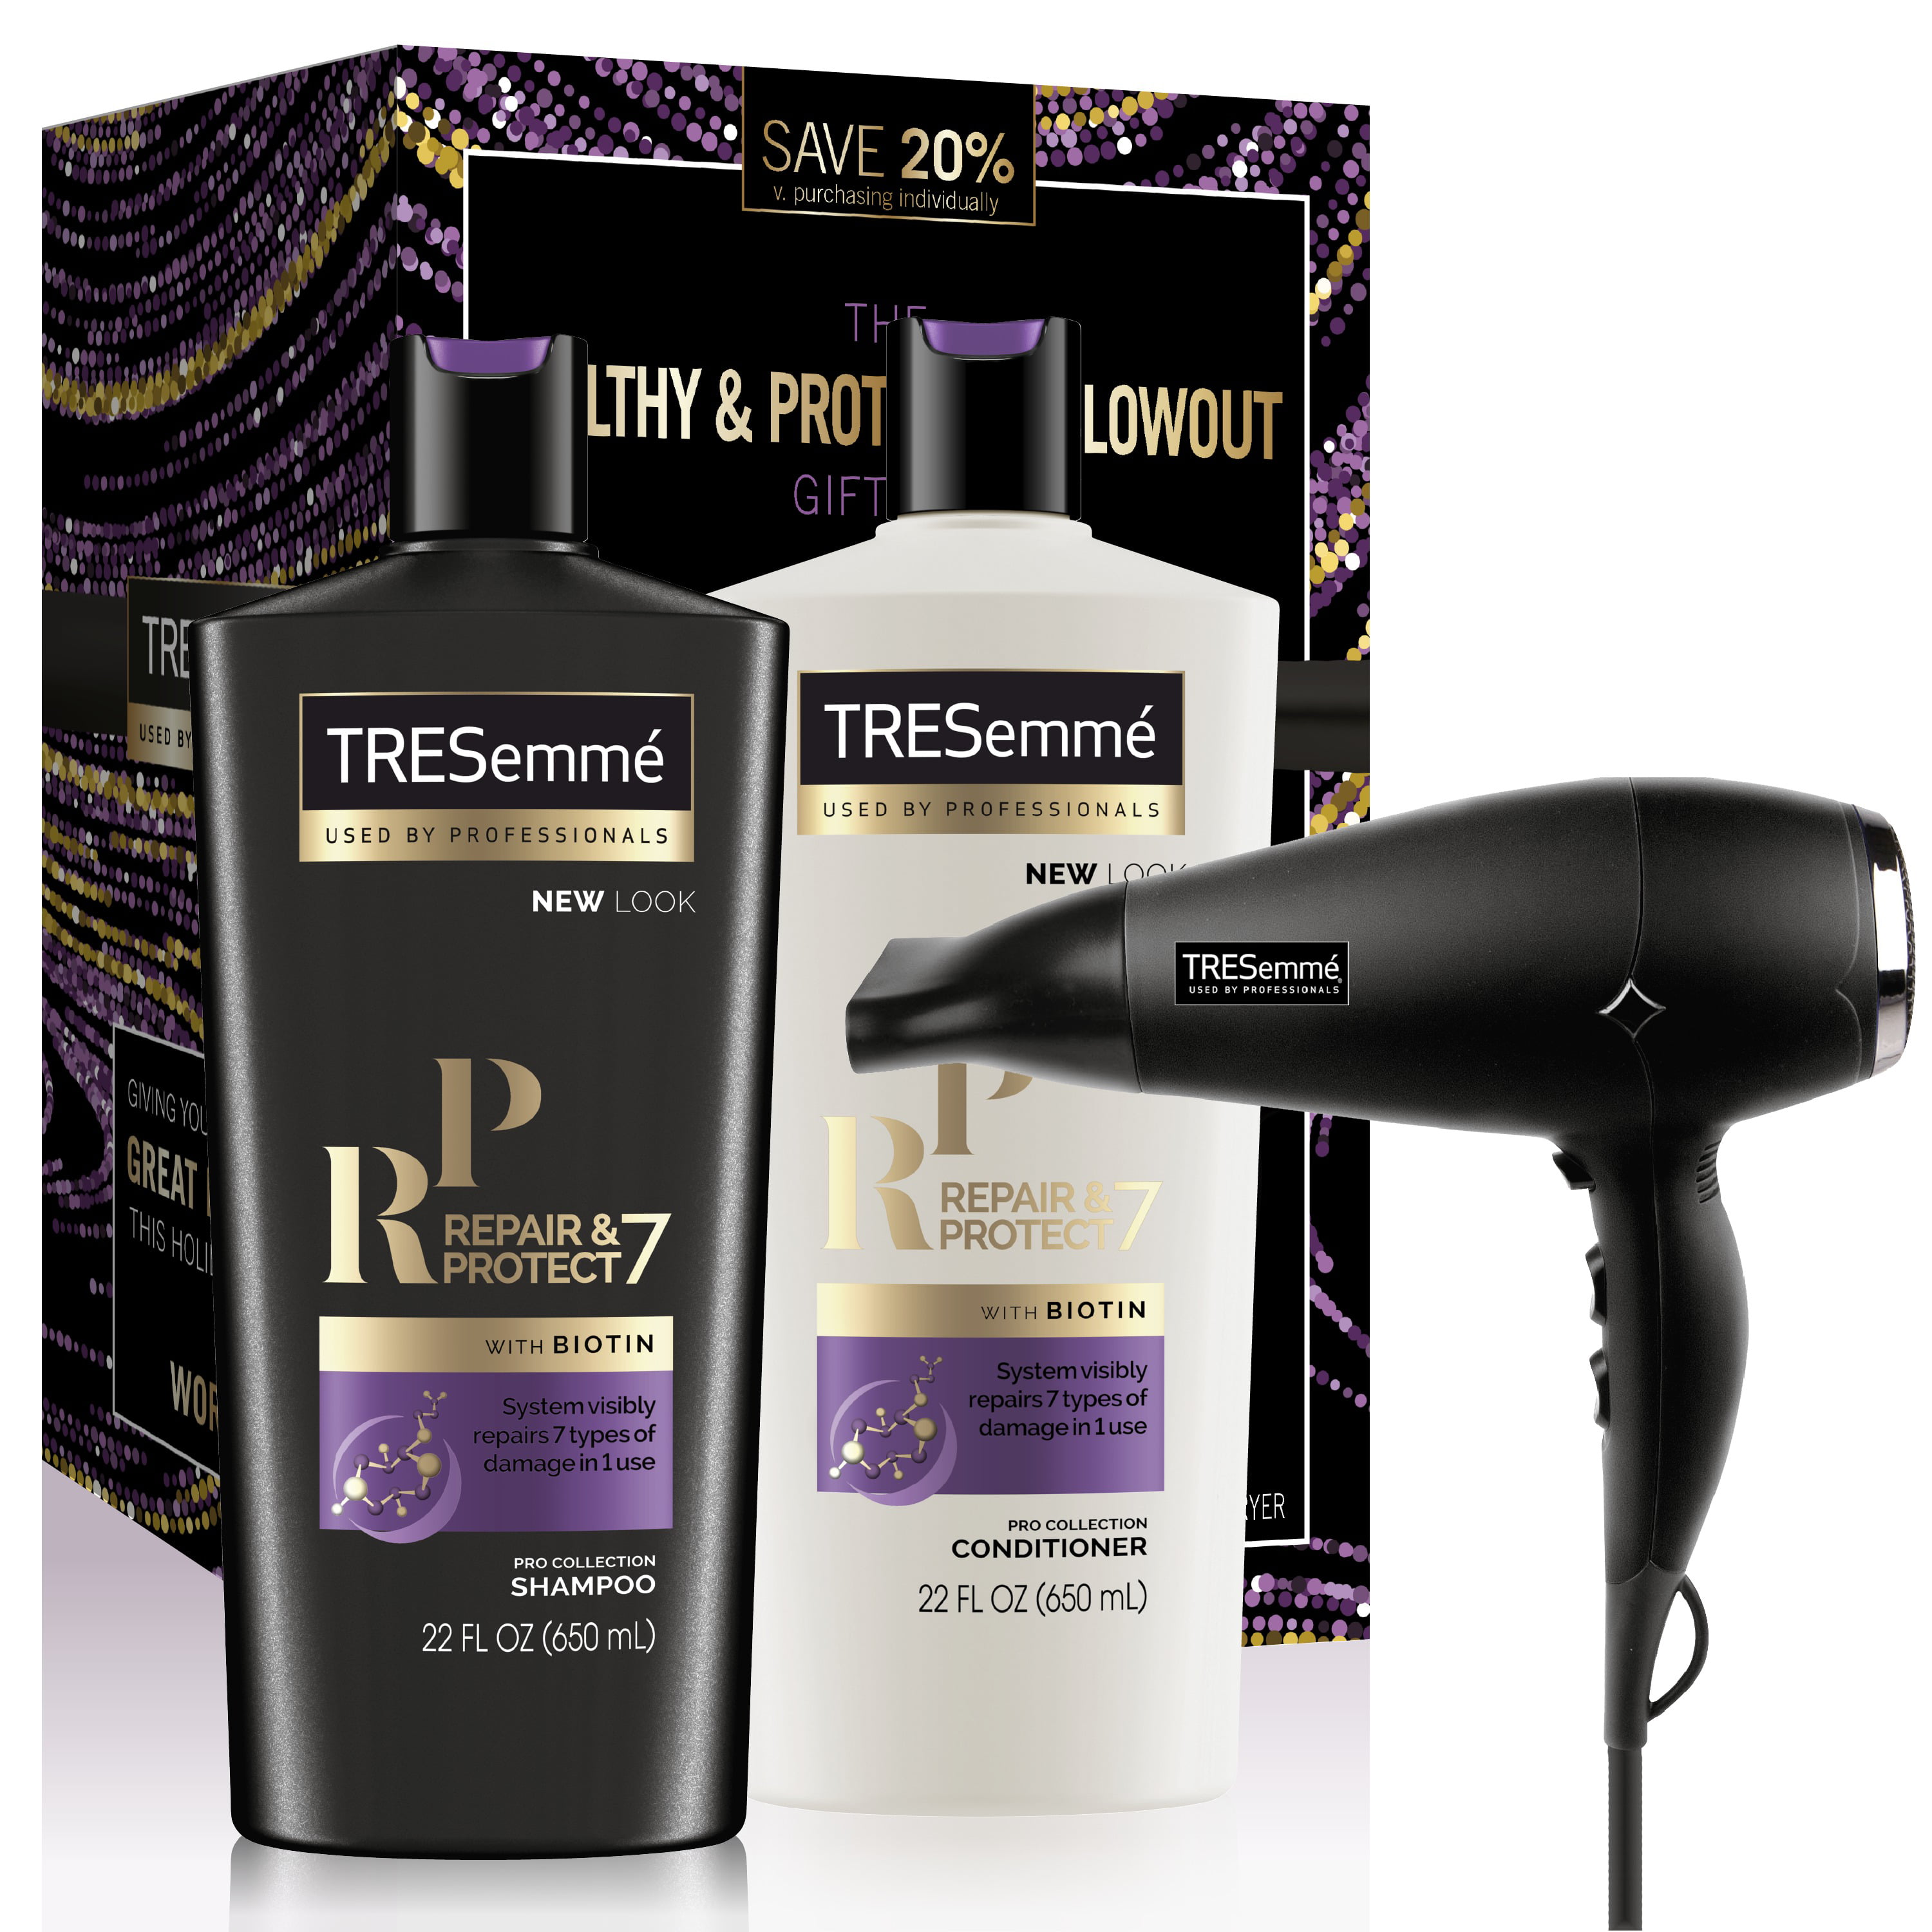 TRESemme® Hair Care Kit